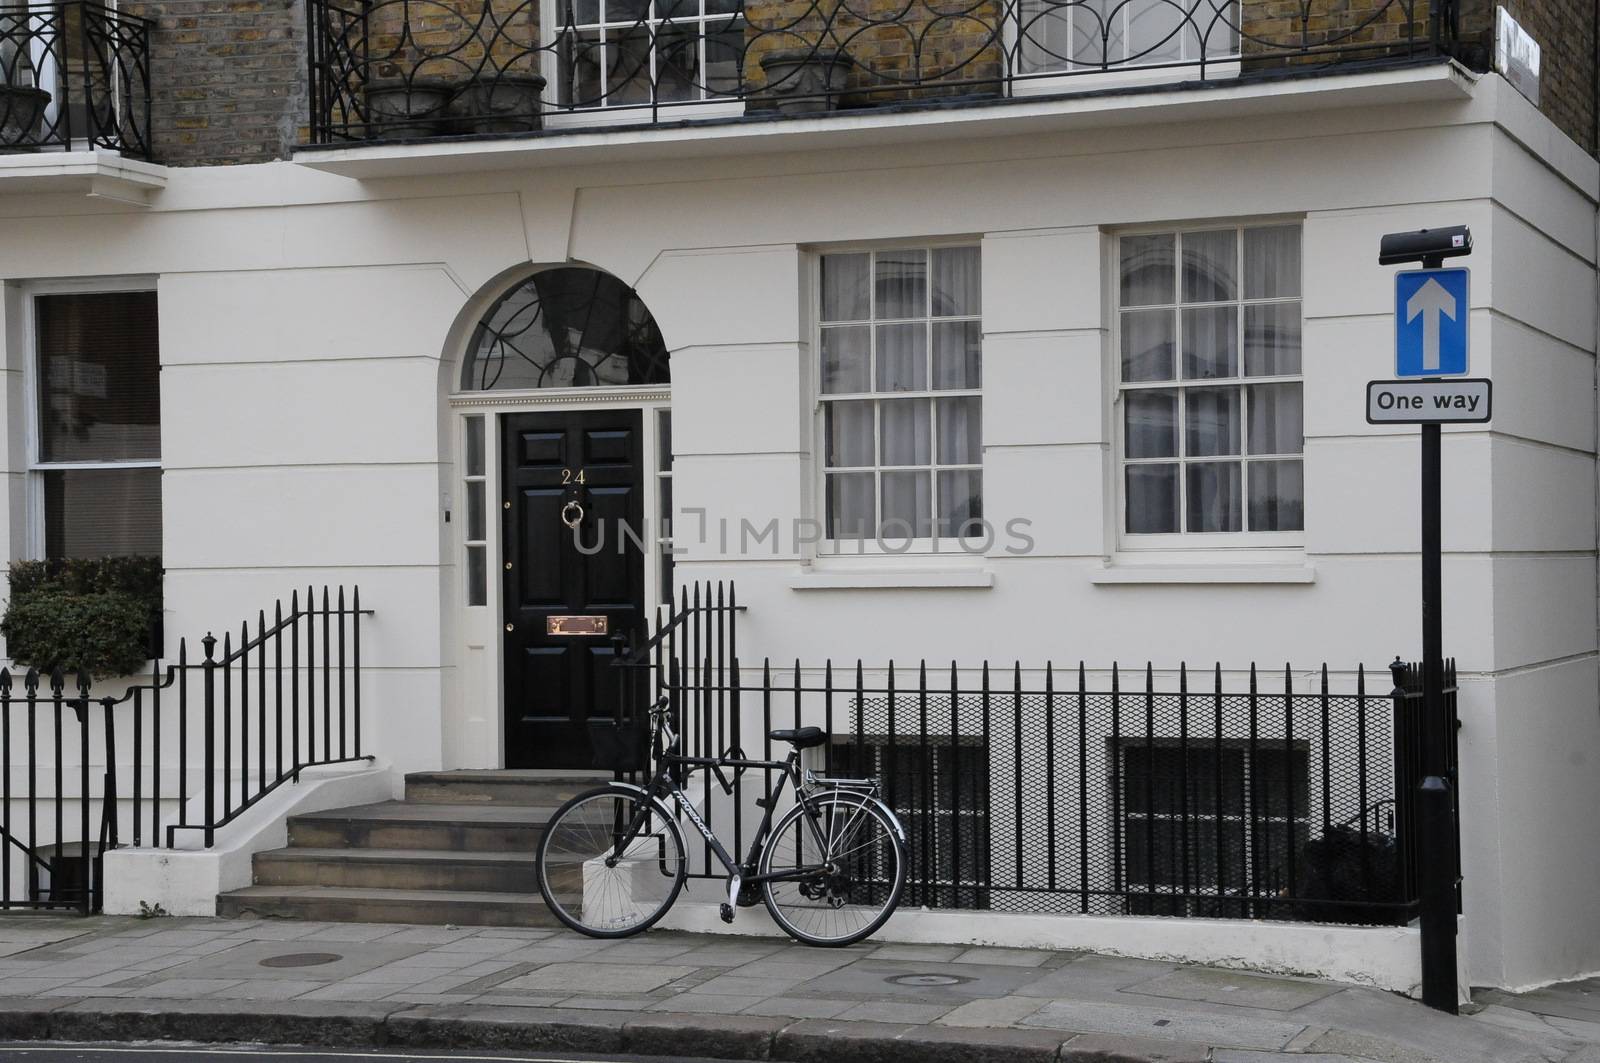 Brian Epstein's London house